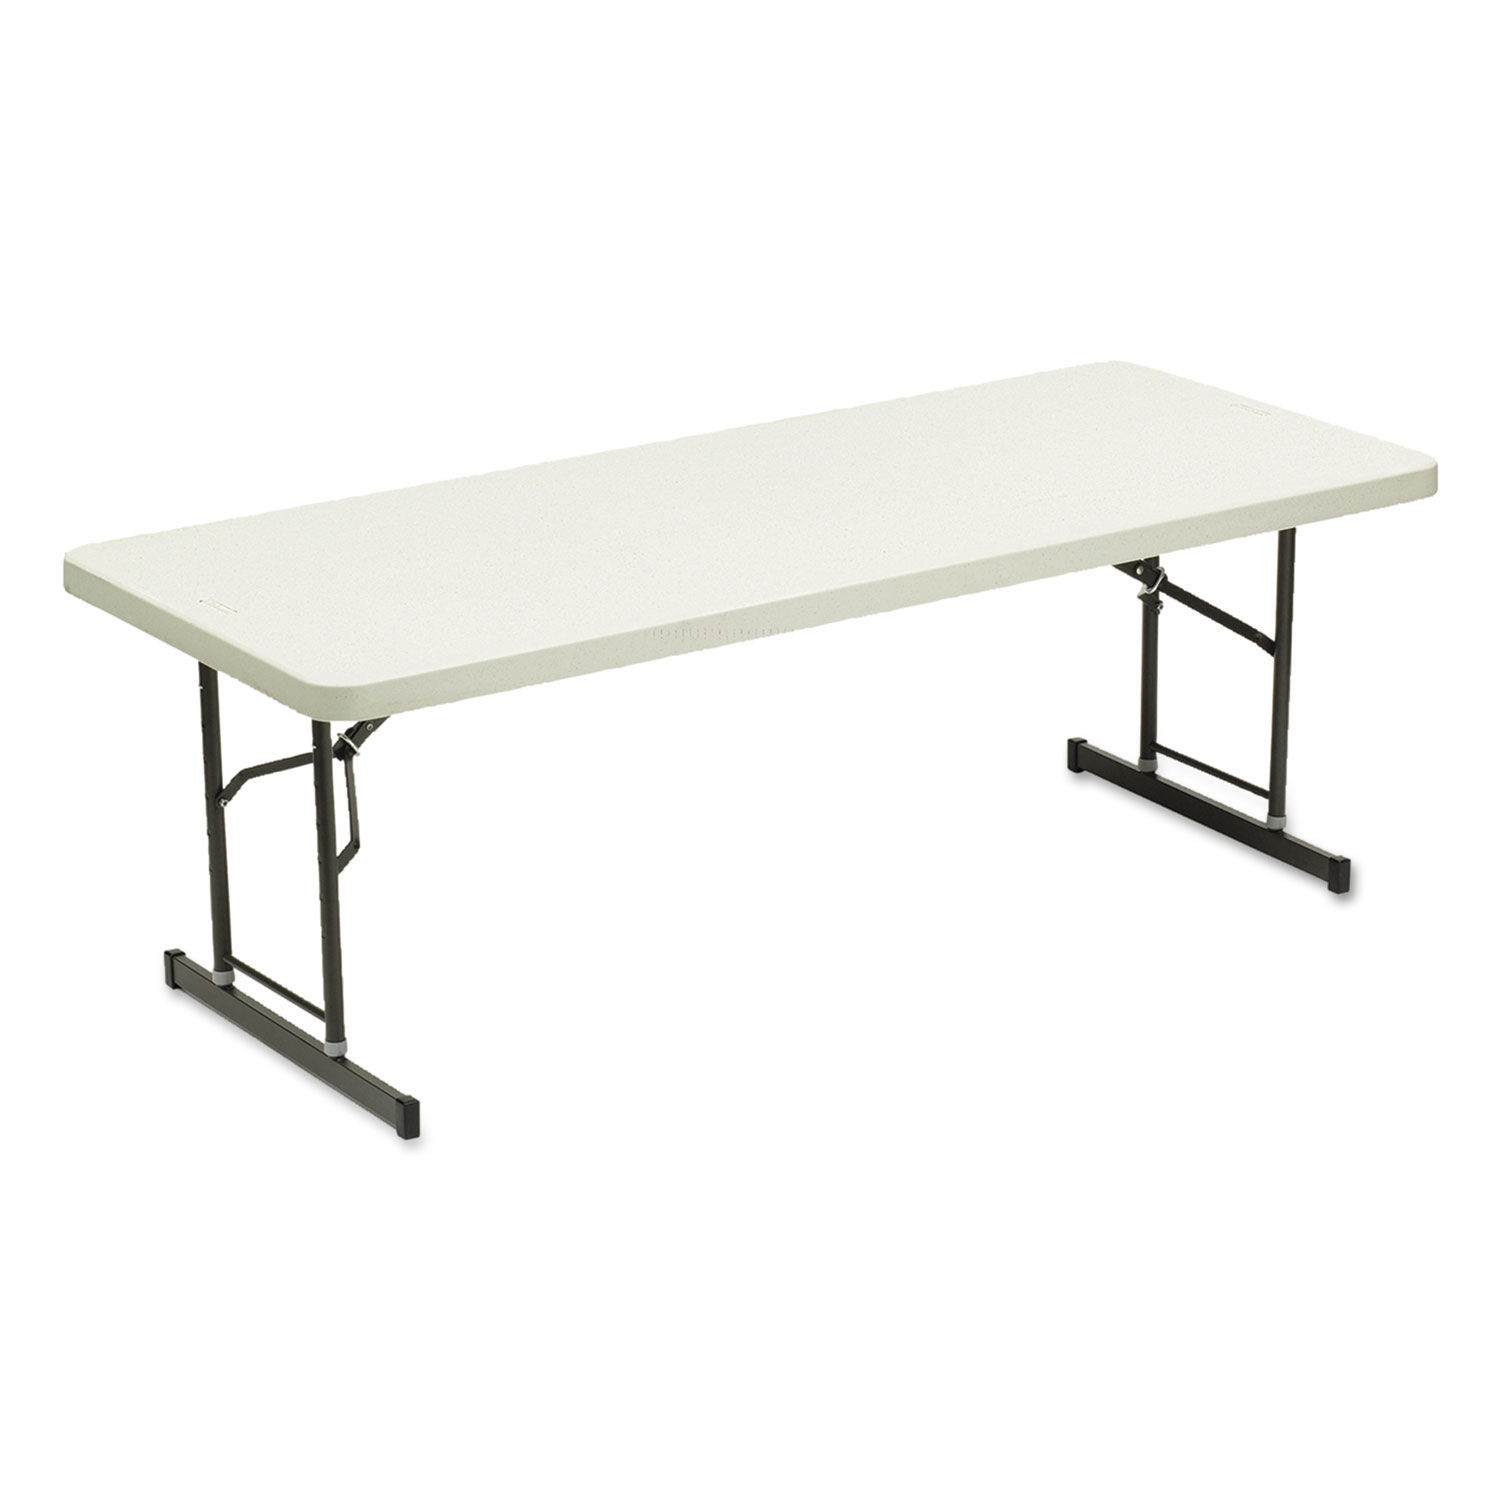 Adjustable Height Tables 72w x 30d x 25-35h, Platinum